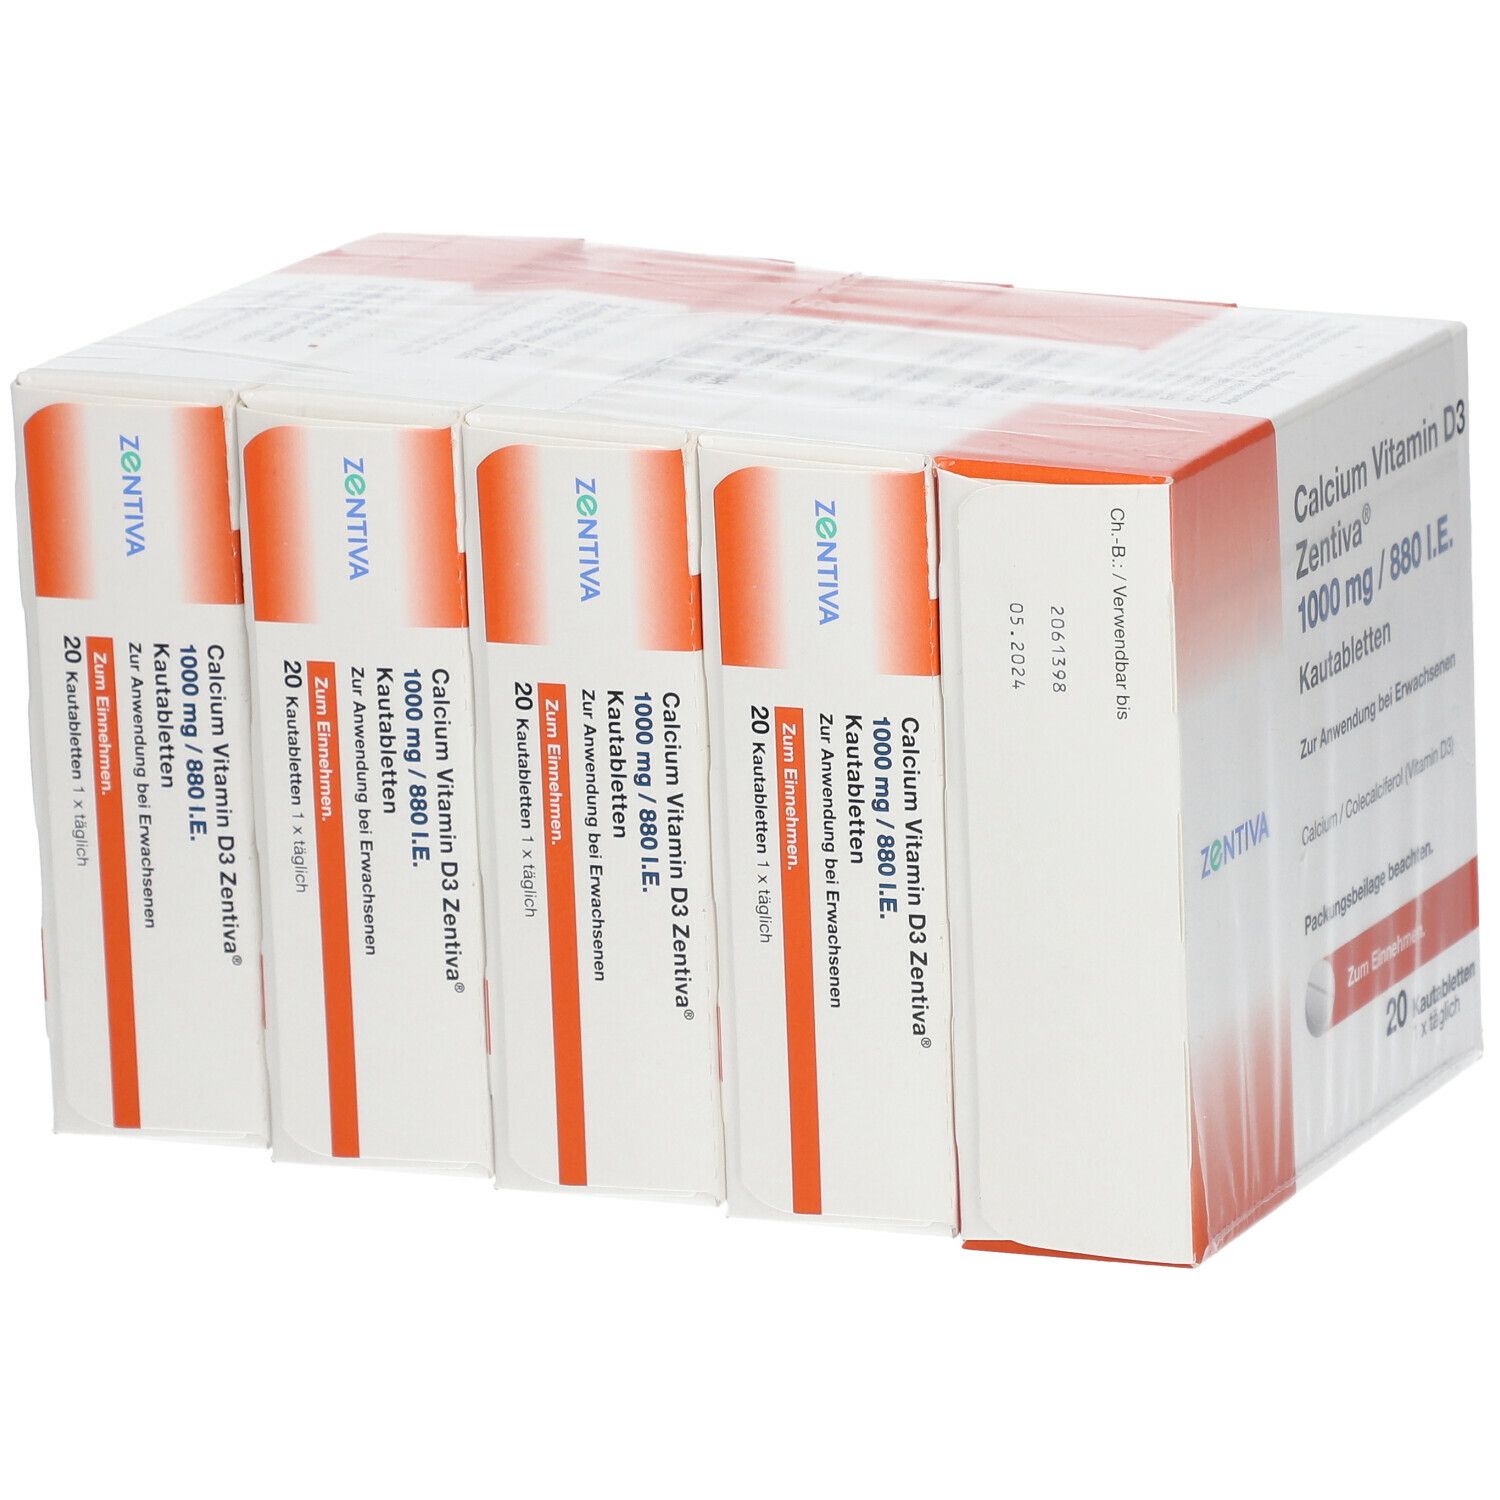 Calcium Vitamin D3 Zentiva® 1000 mg/880 I.E.